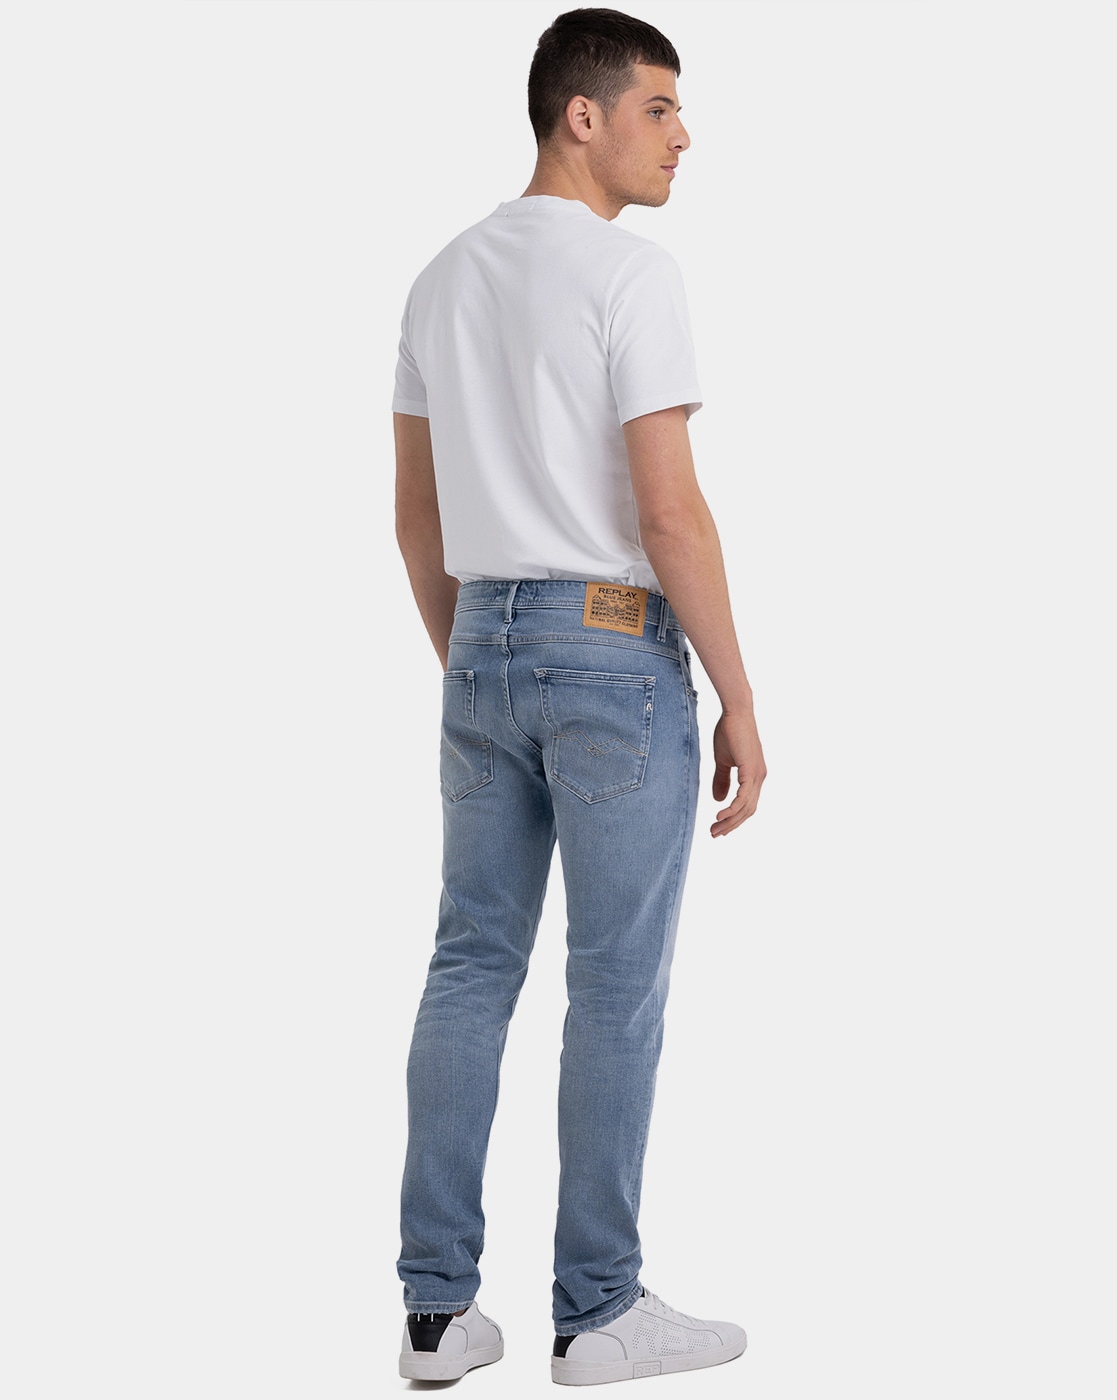 Buy Blue Jeans for Men by DNMX Online | Ajio.com